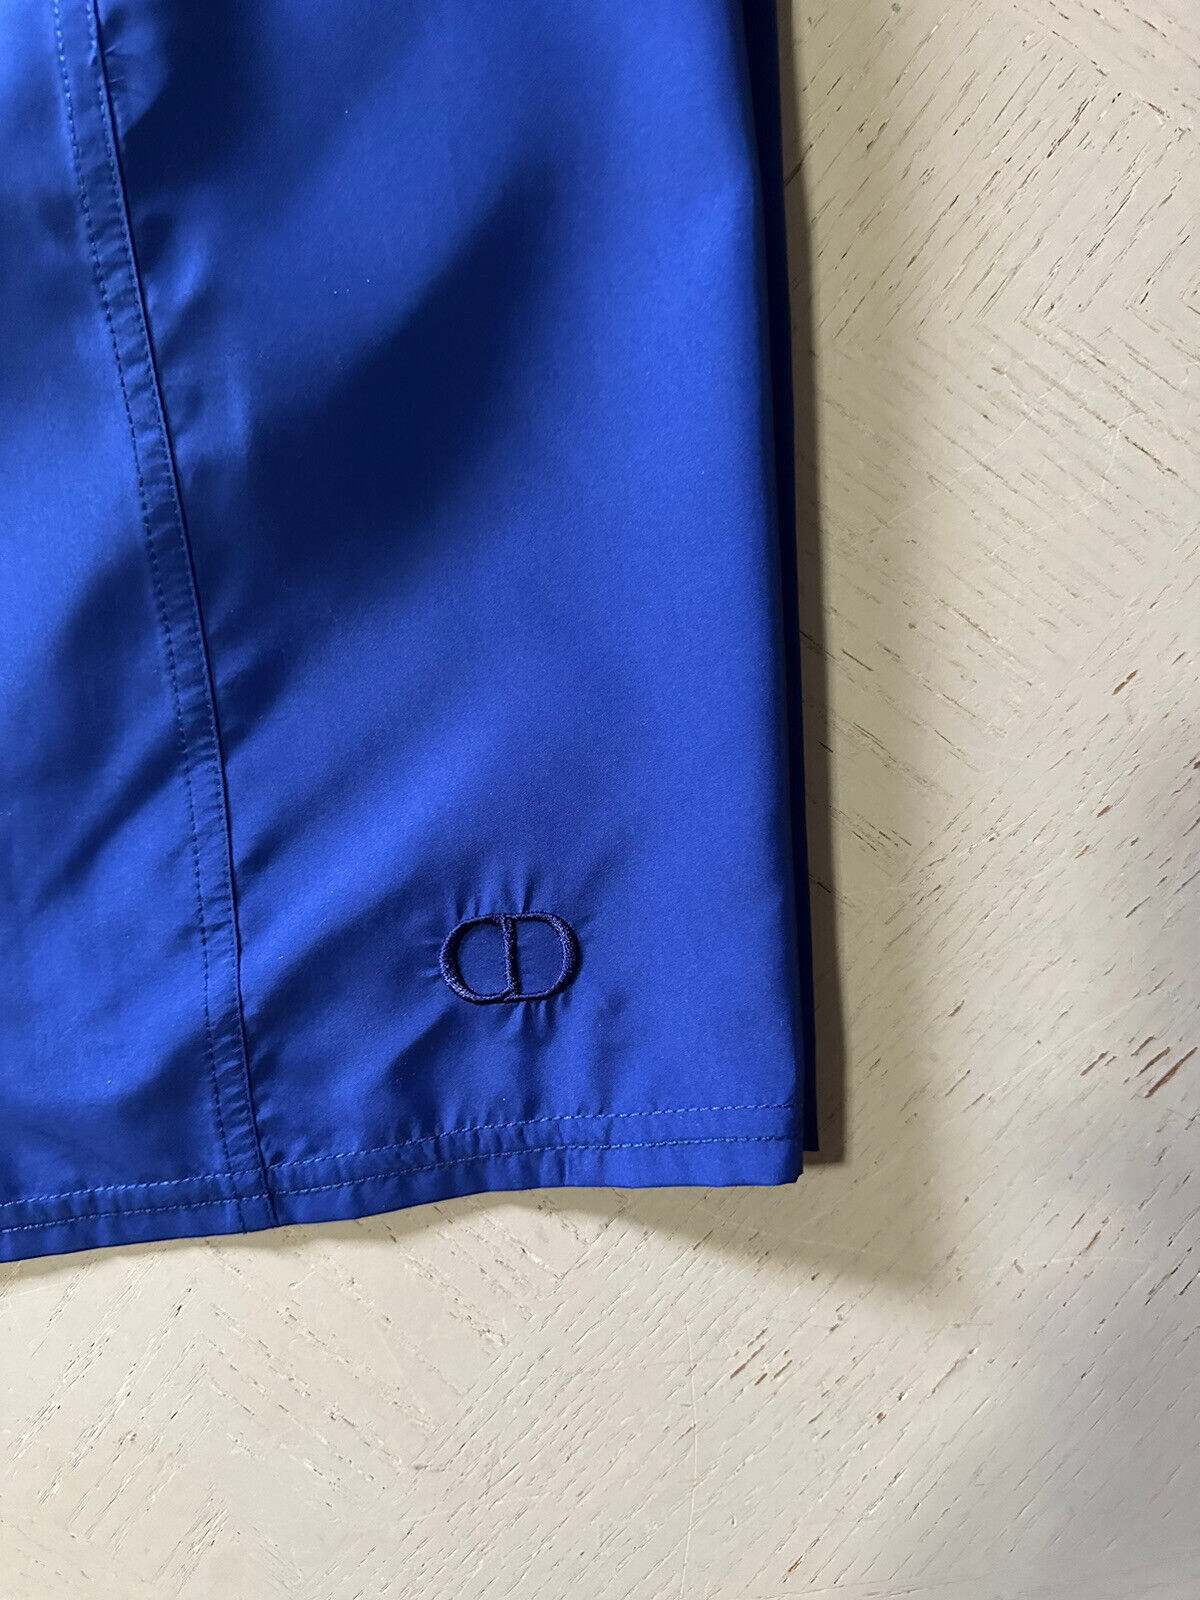 NWT $790 Шорты для плавания DIOR на шнурке, синие, размер S